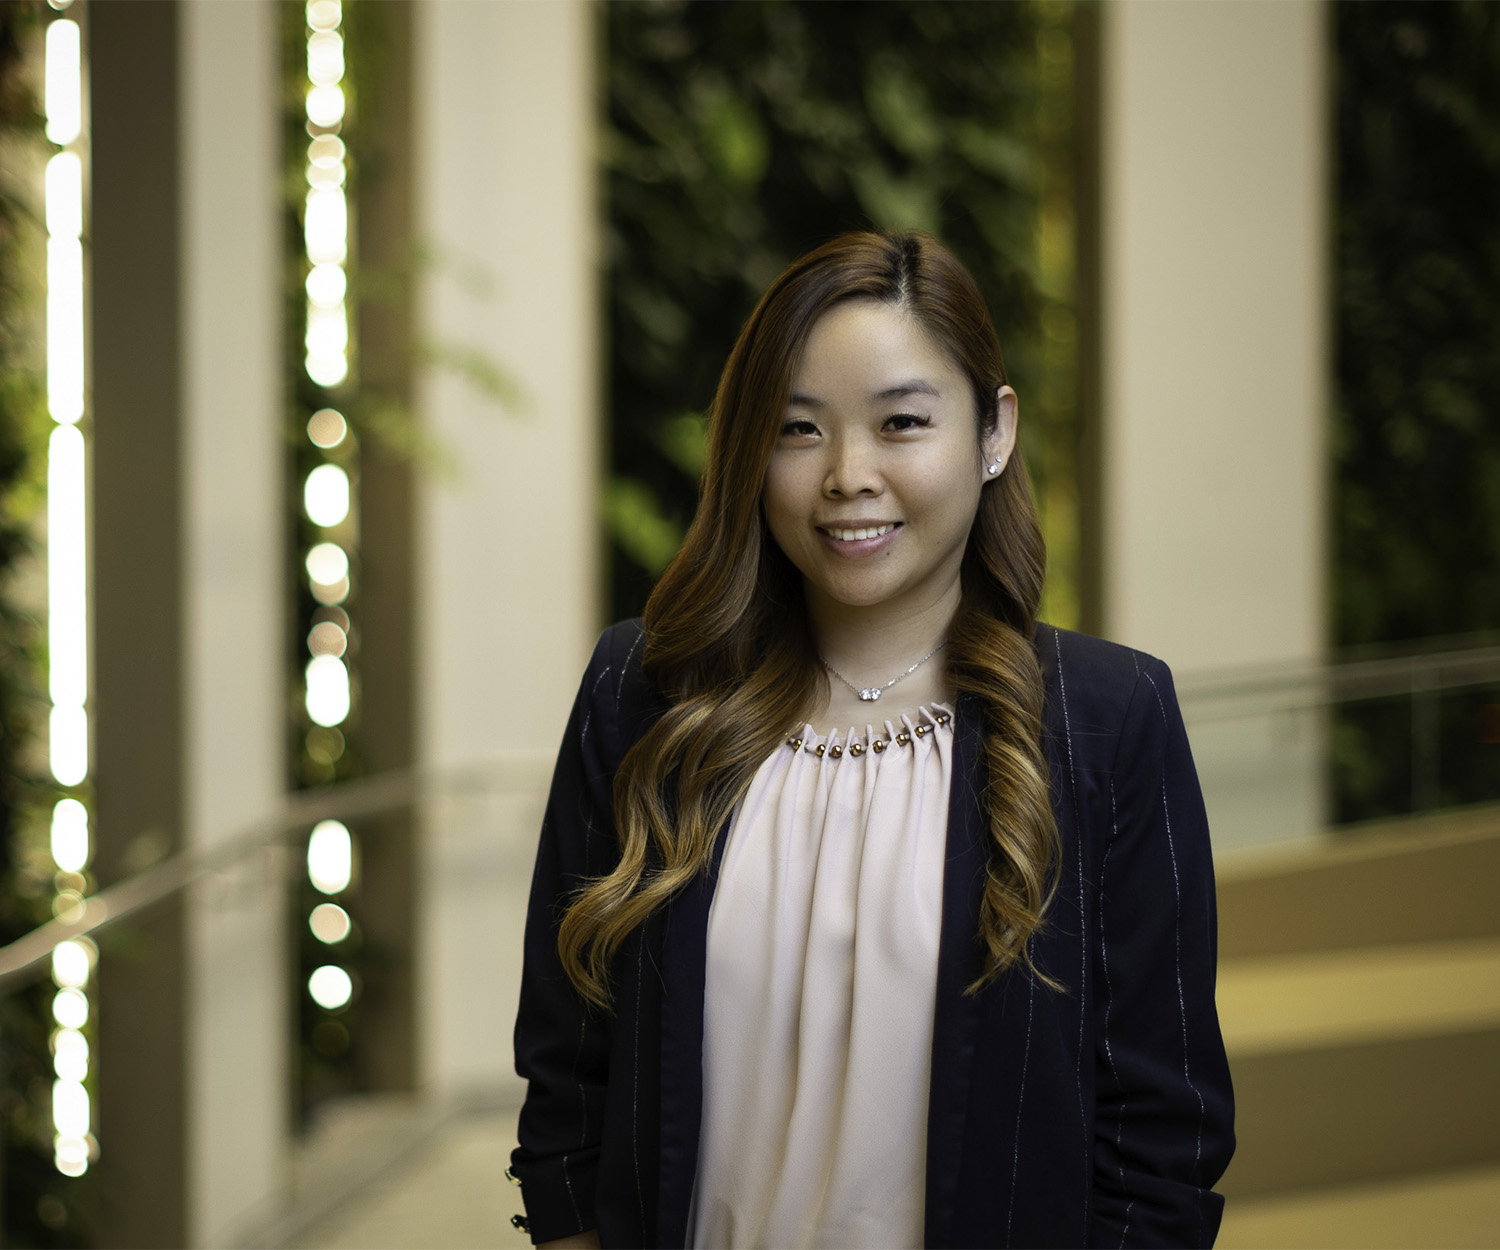 Janet Chui's Profile Image